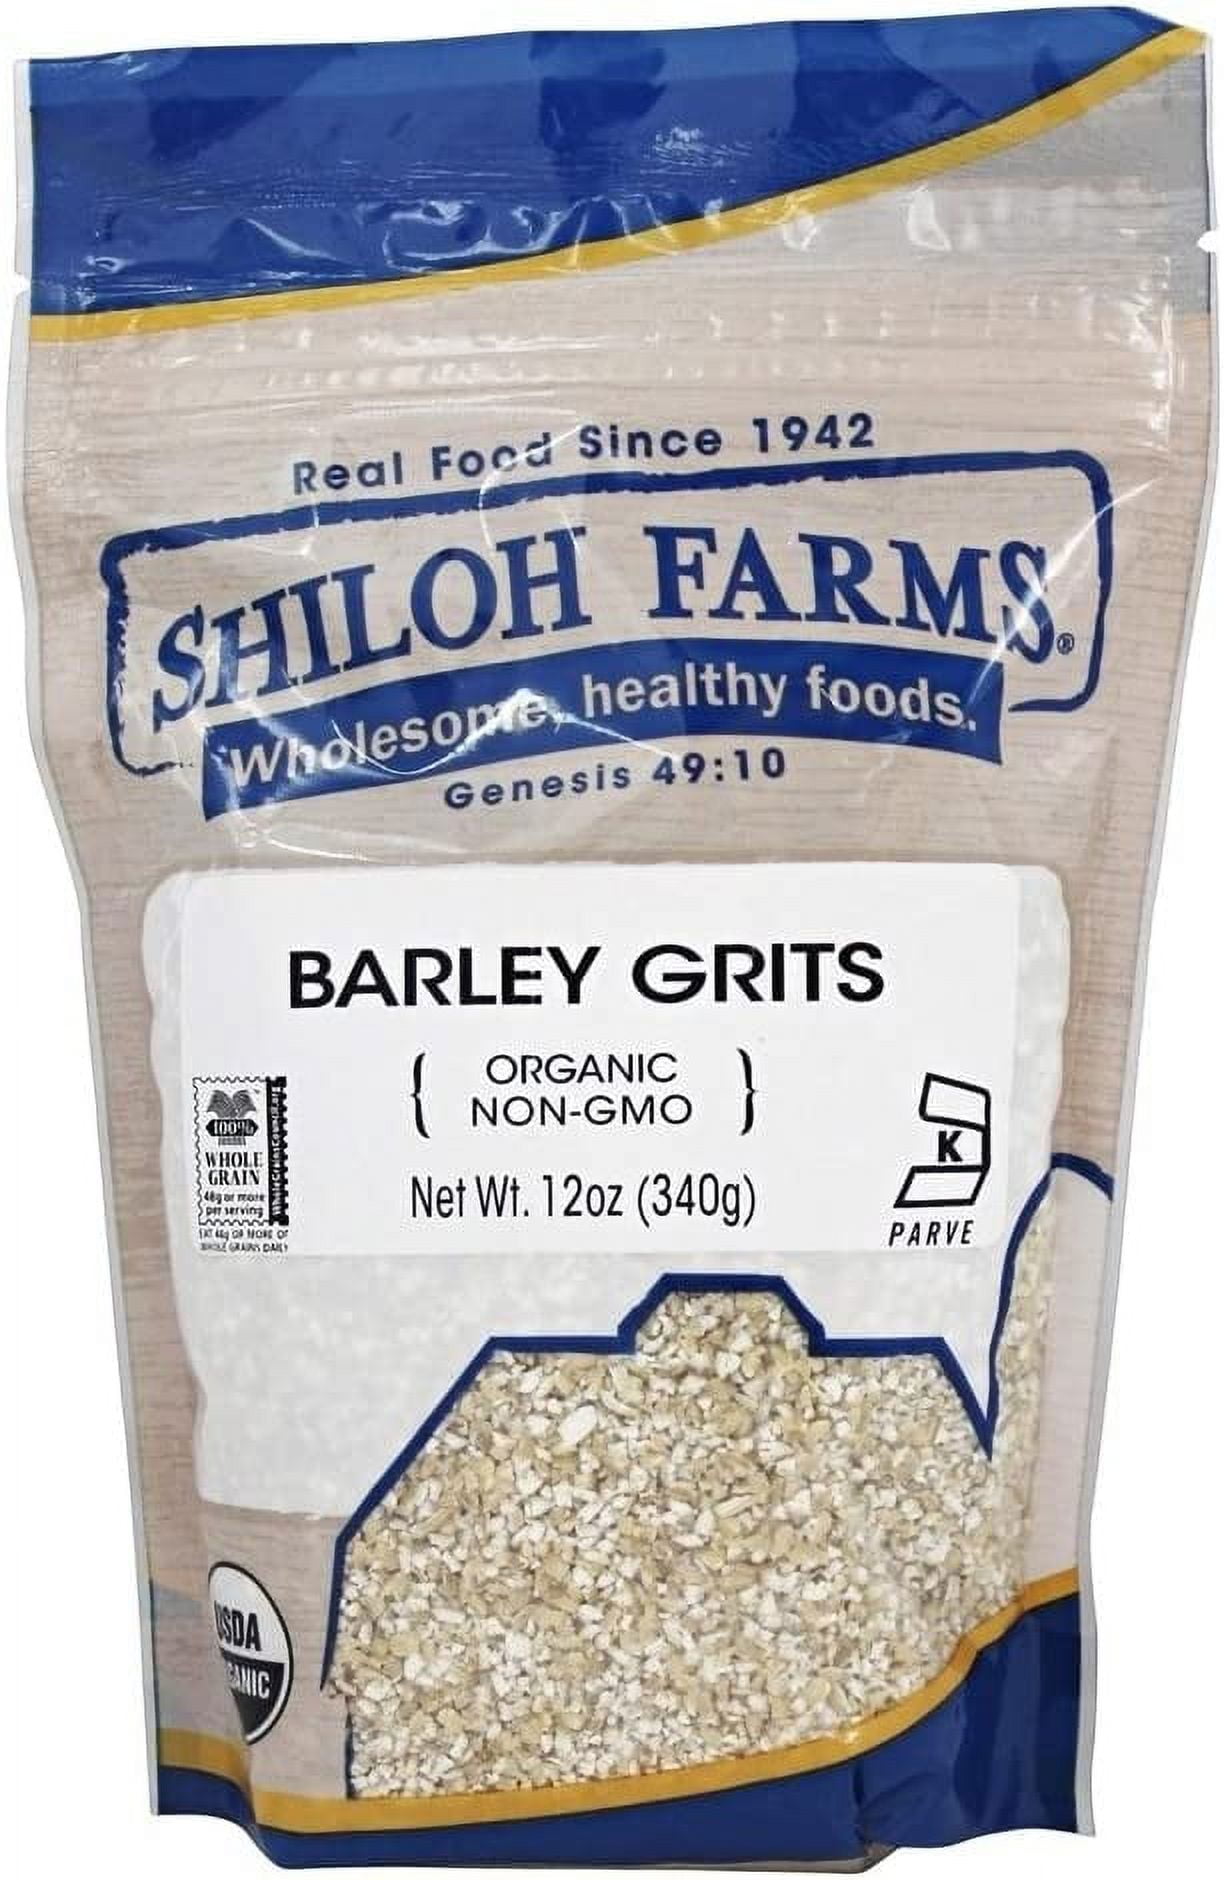 Shiloh Farms Organic Barley Flakes, 16 oz - Gerbes Super Markets